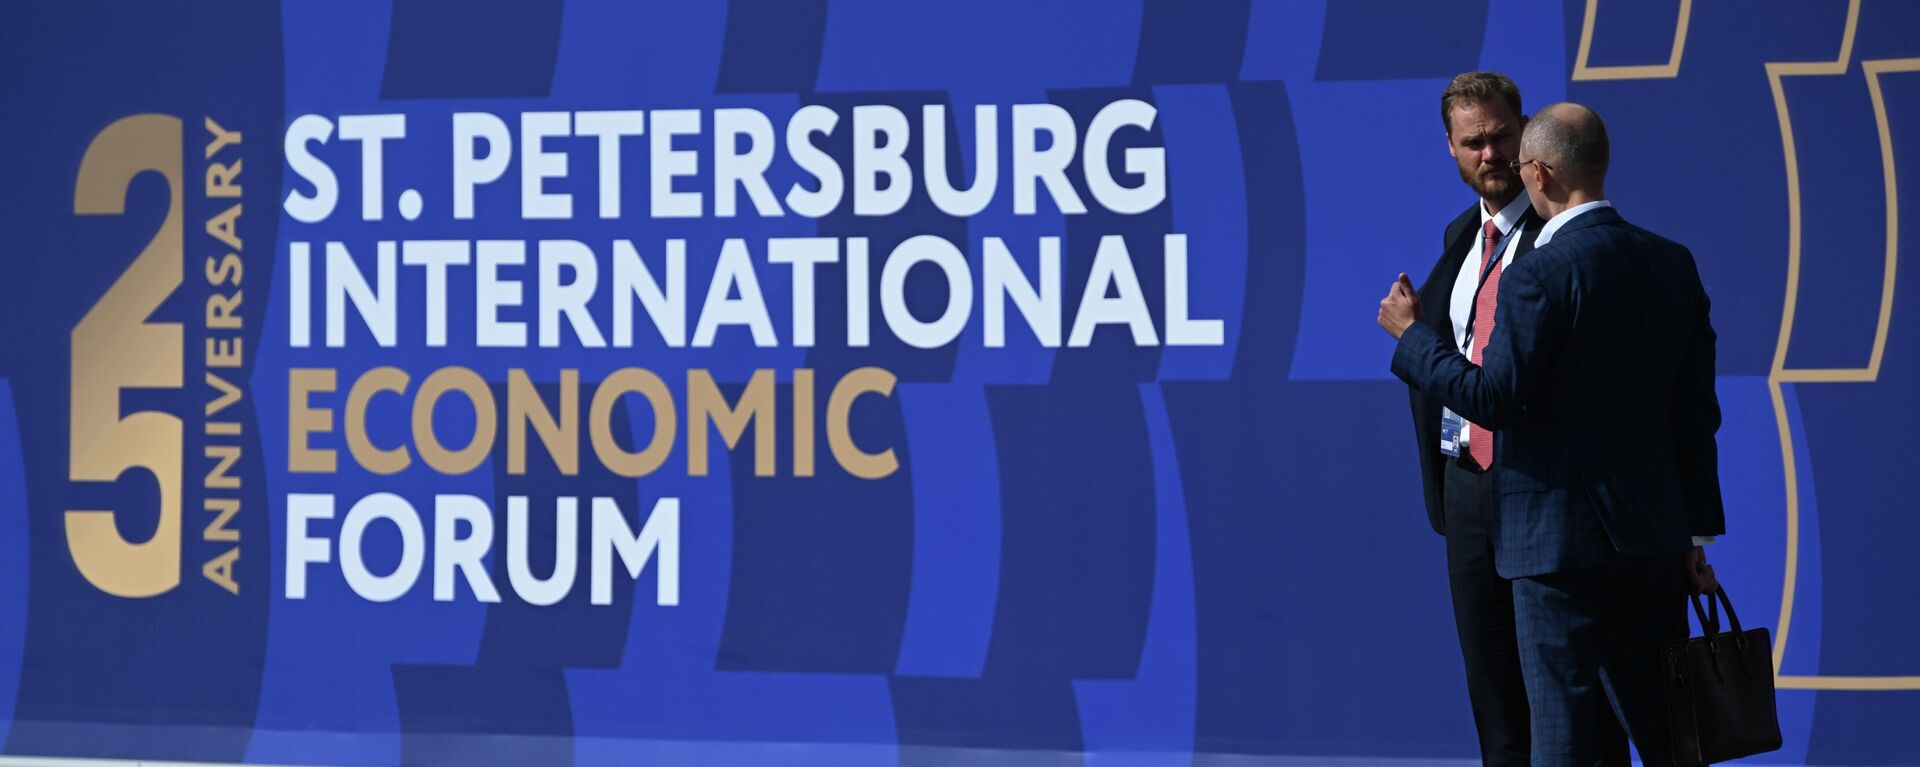 Foro Económico Internacional de San Petersburgo (SPIEF, por sus siglas inglesas) - Sputnik Mundo, 1920, 17.06.2022